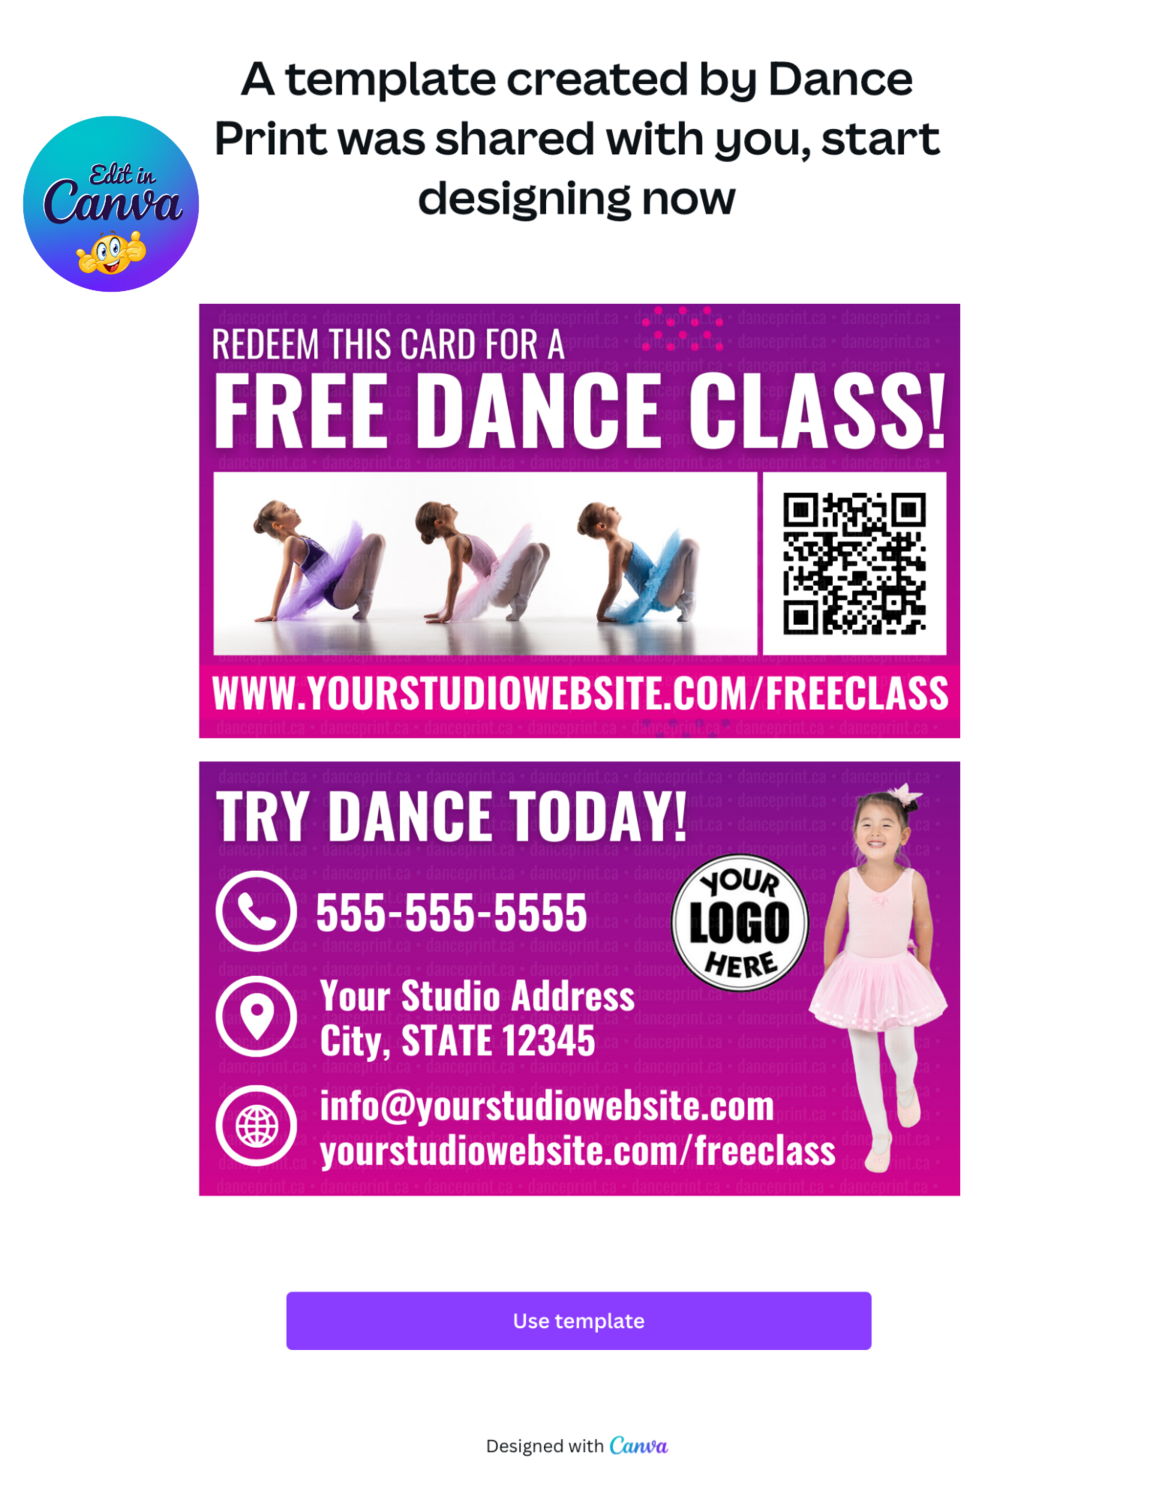 Canva Template: Free Dance Class - Business Card Size